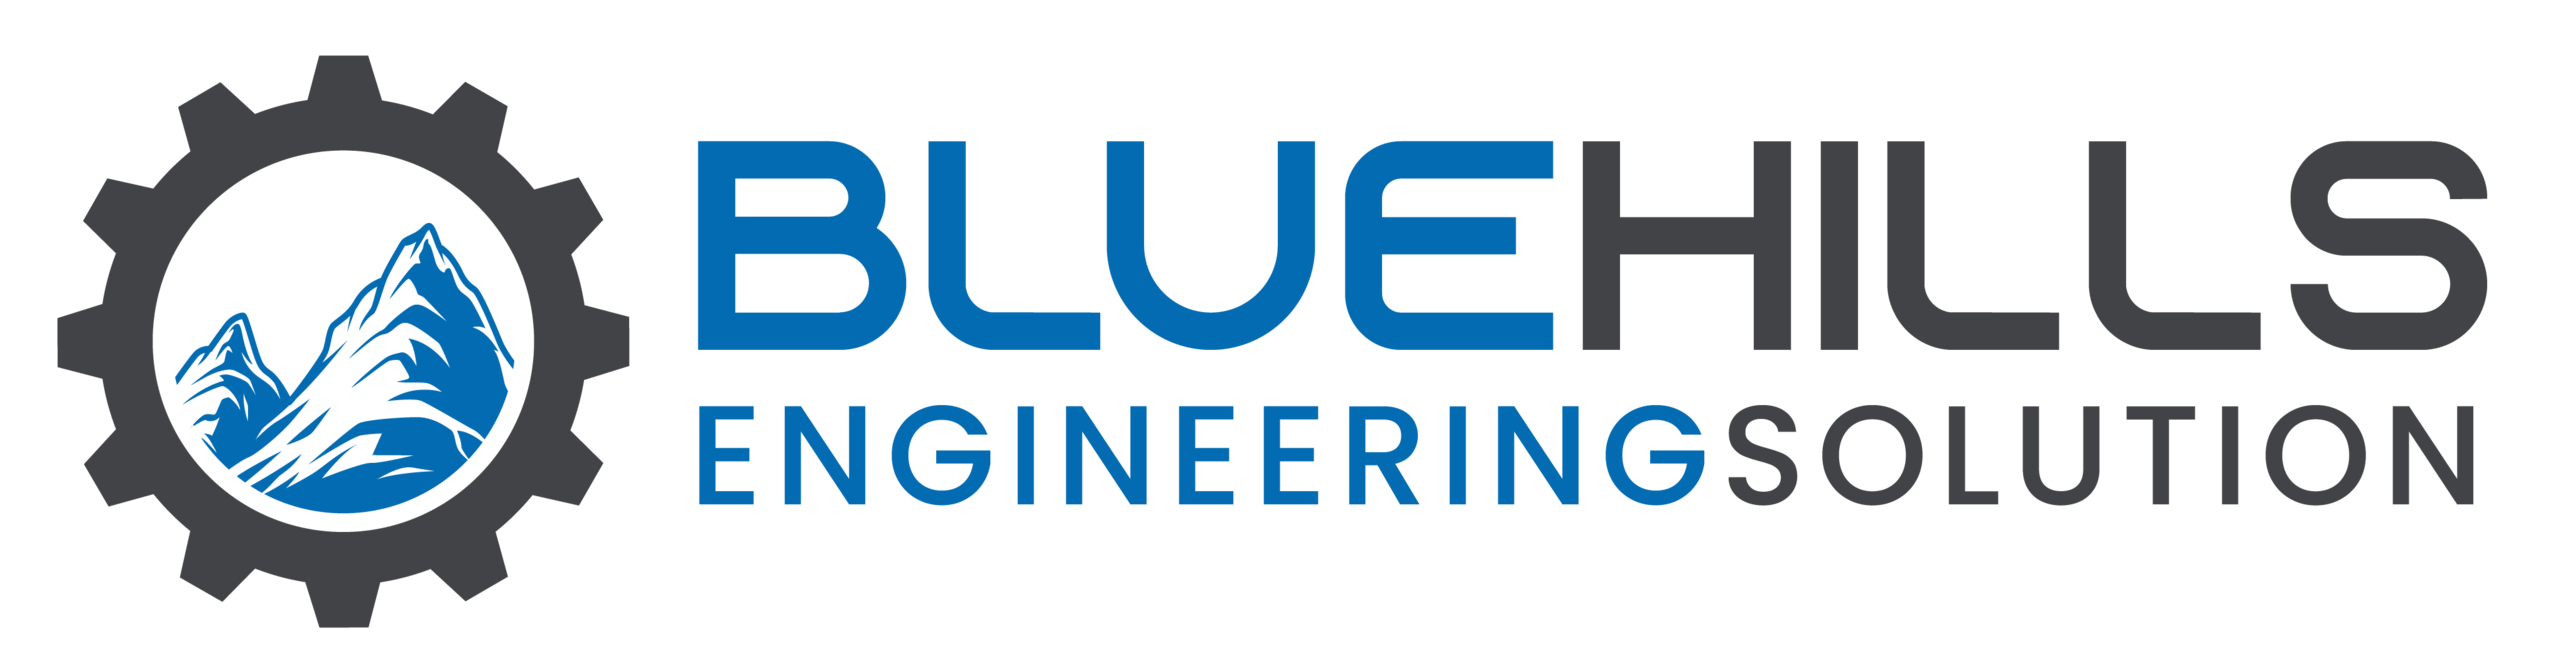 Blue Hills Engineering